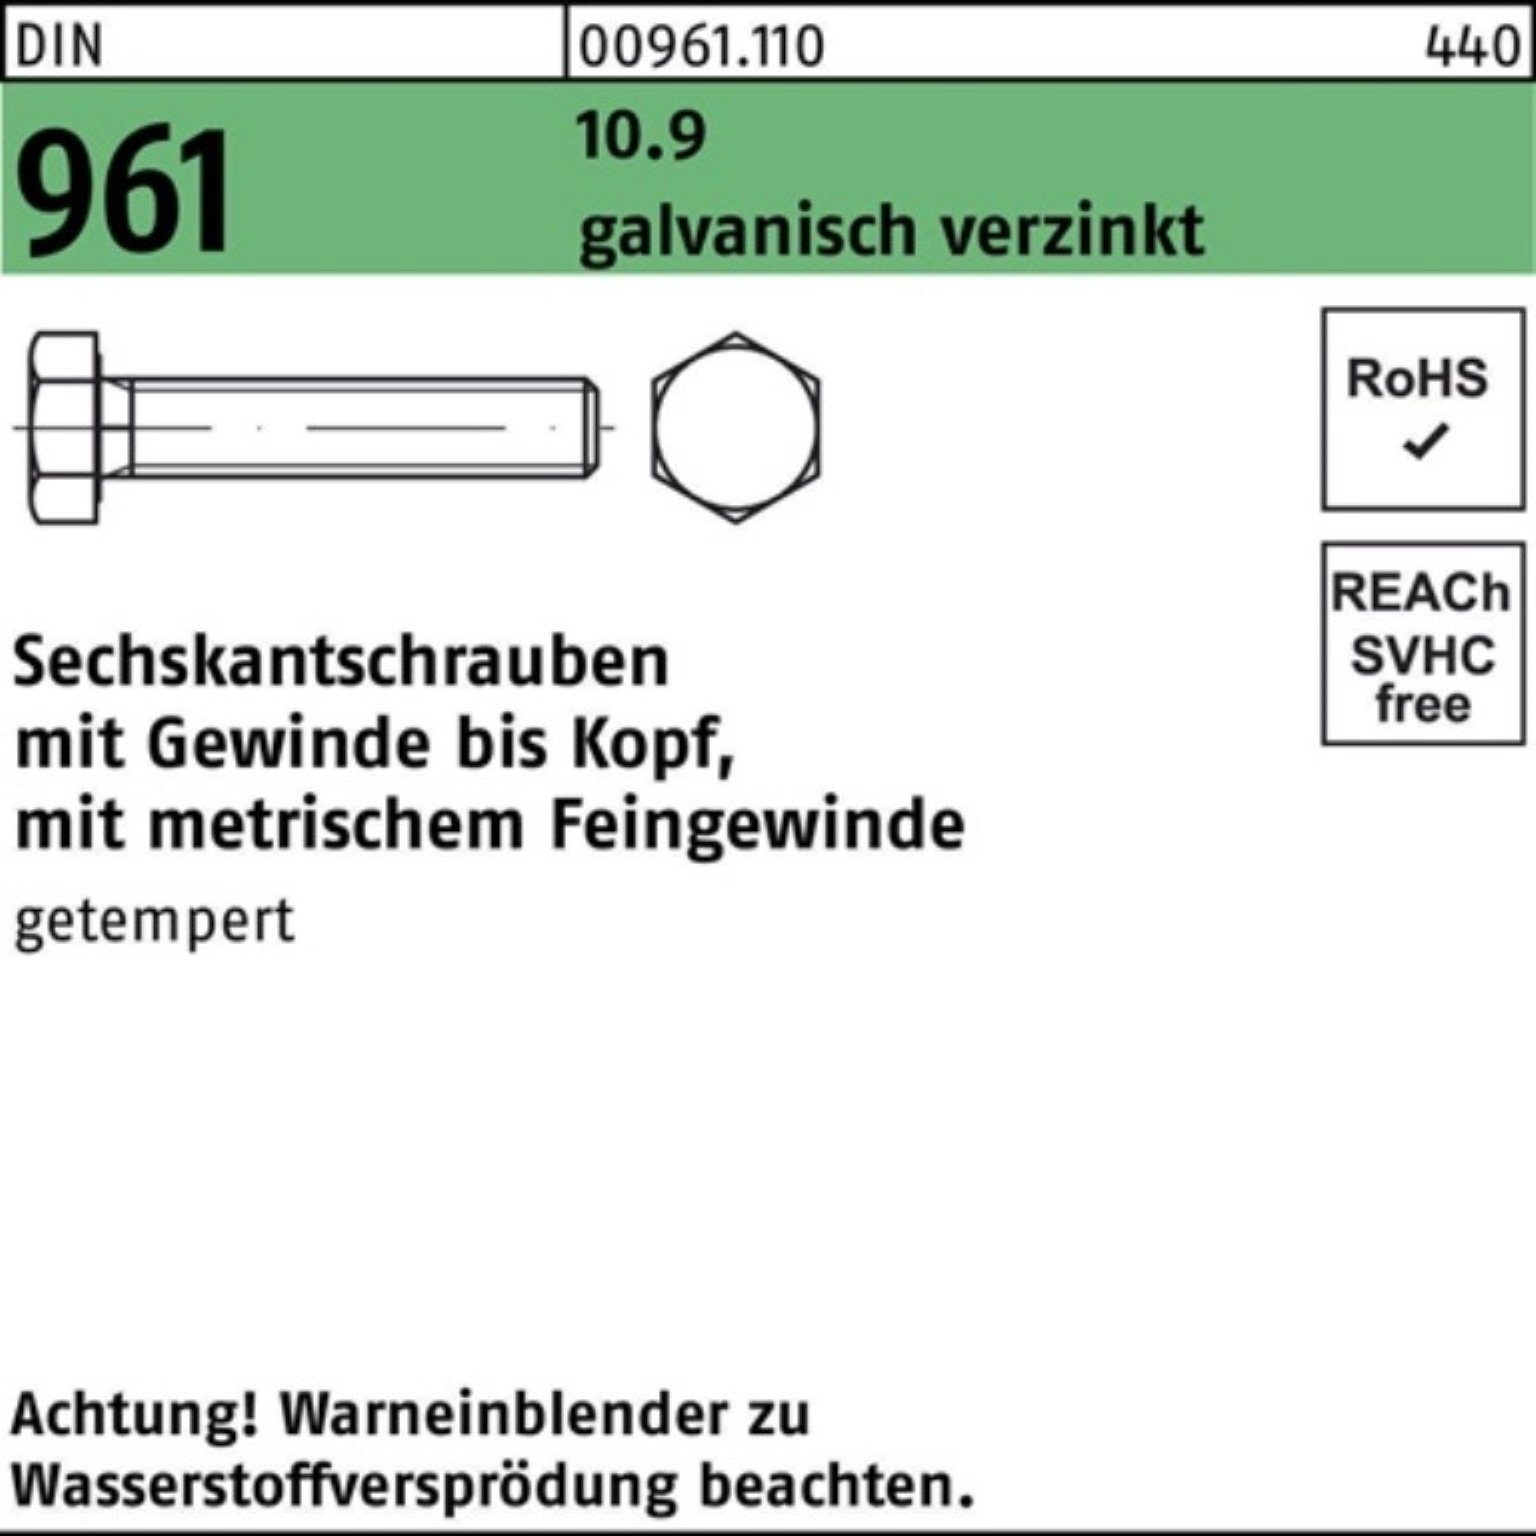 Reyher Sechskantschraube 100er Pack Sechskantschraube 961 10 DIN 55 M12x1,5x VG 10.9 galv.verz